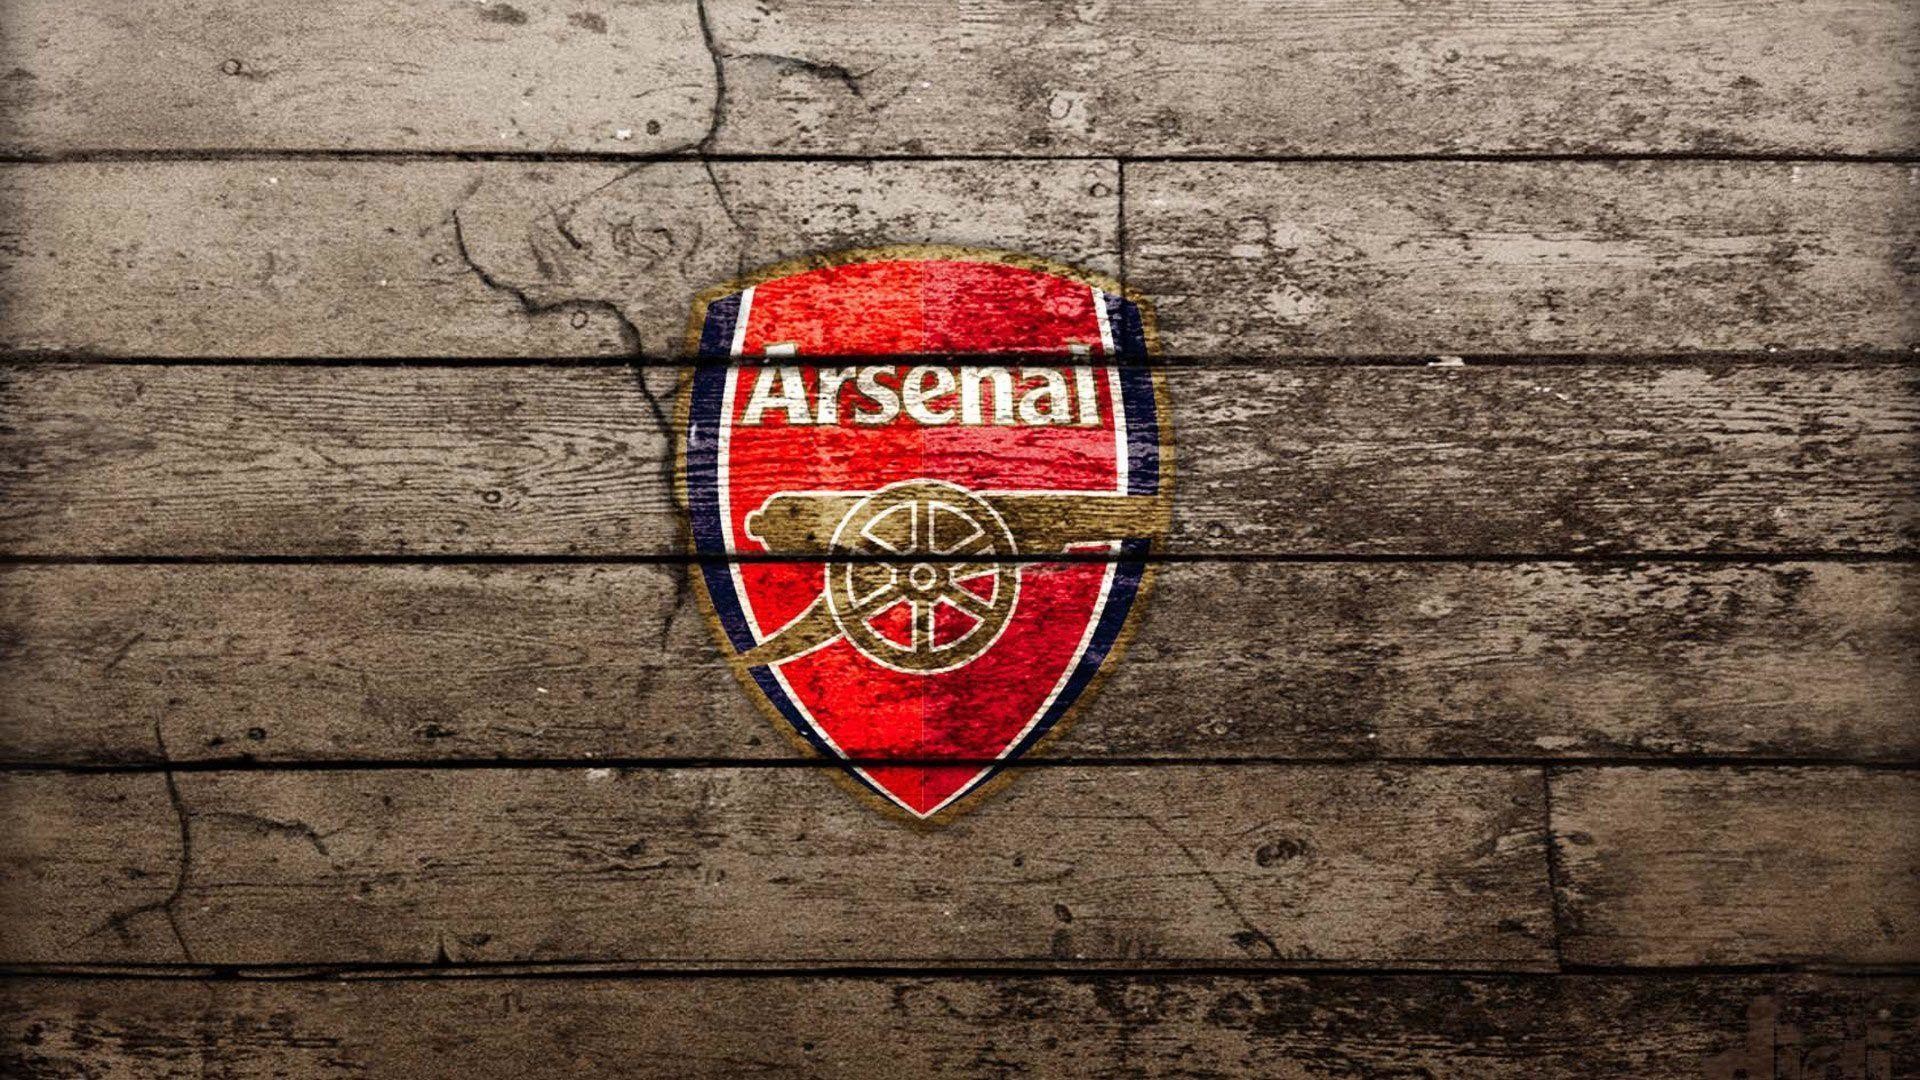 Arsenal fc logo wallpaper hd Wallput.com